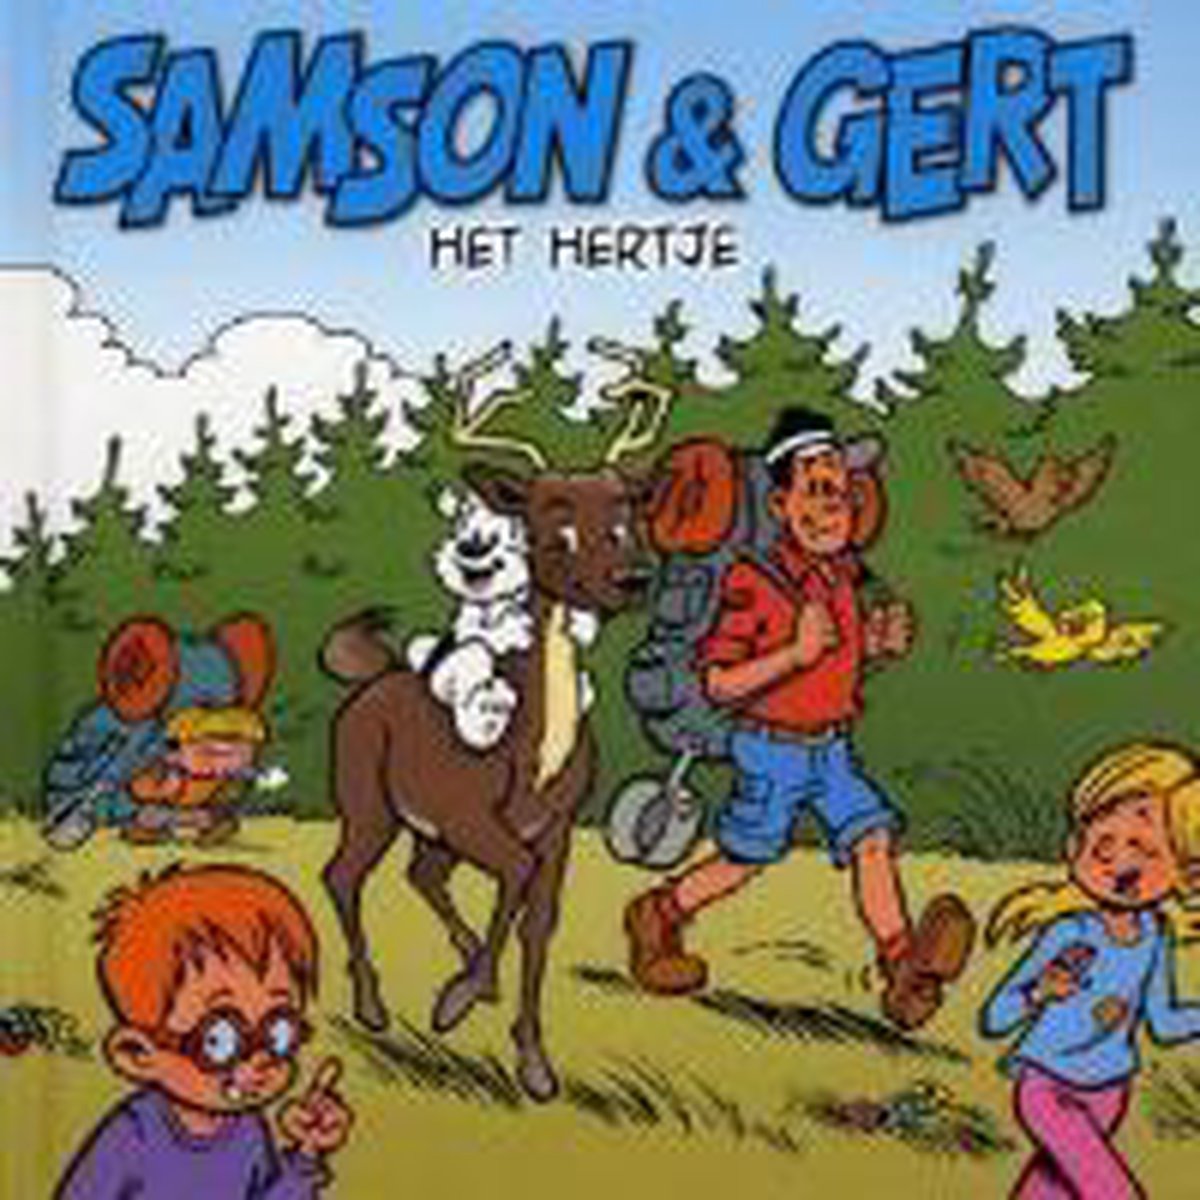 Samson & Gert: Het Hertje